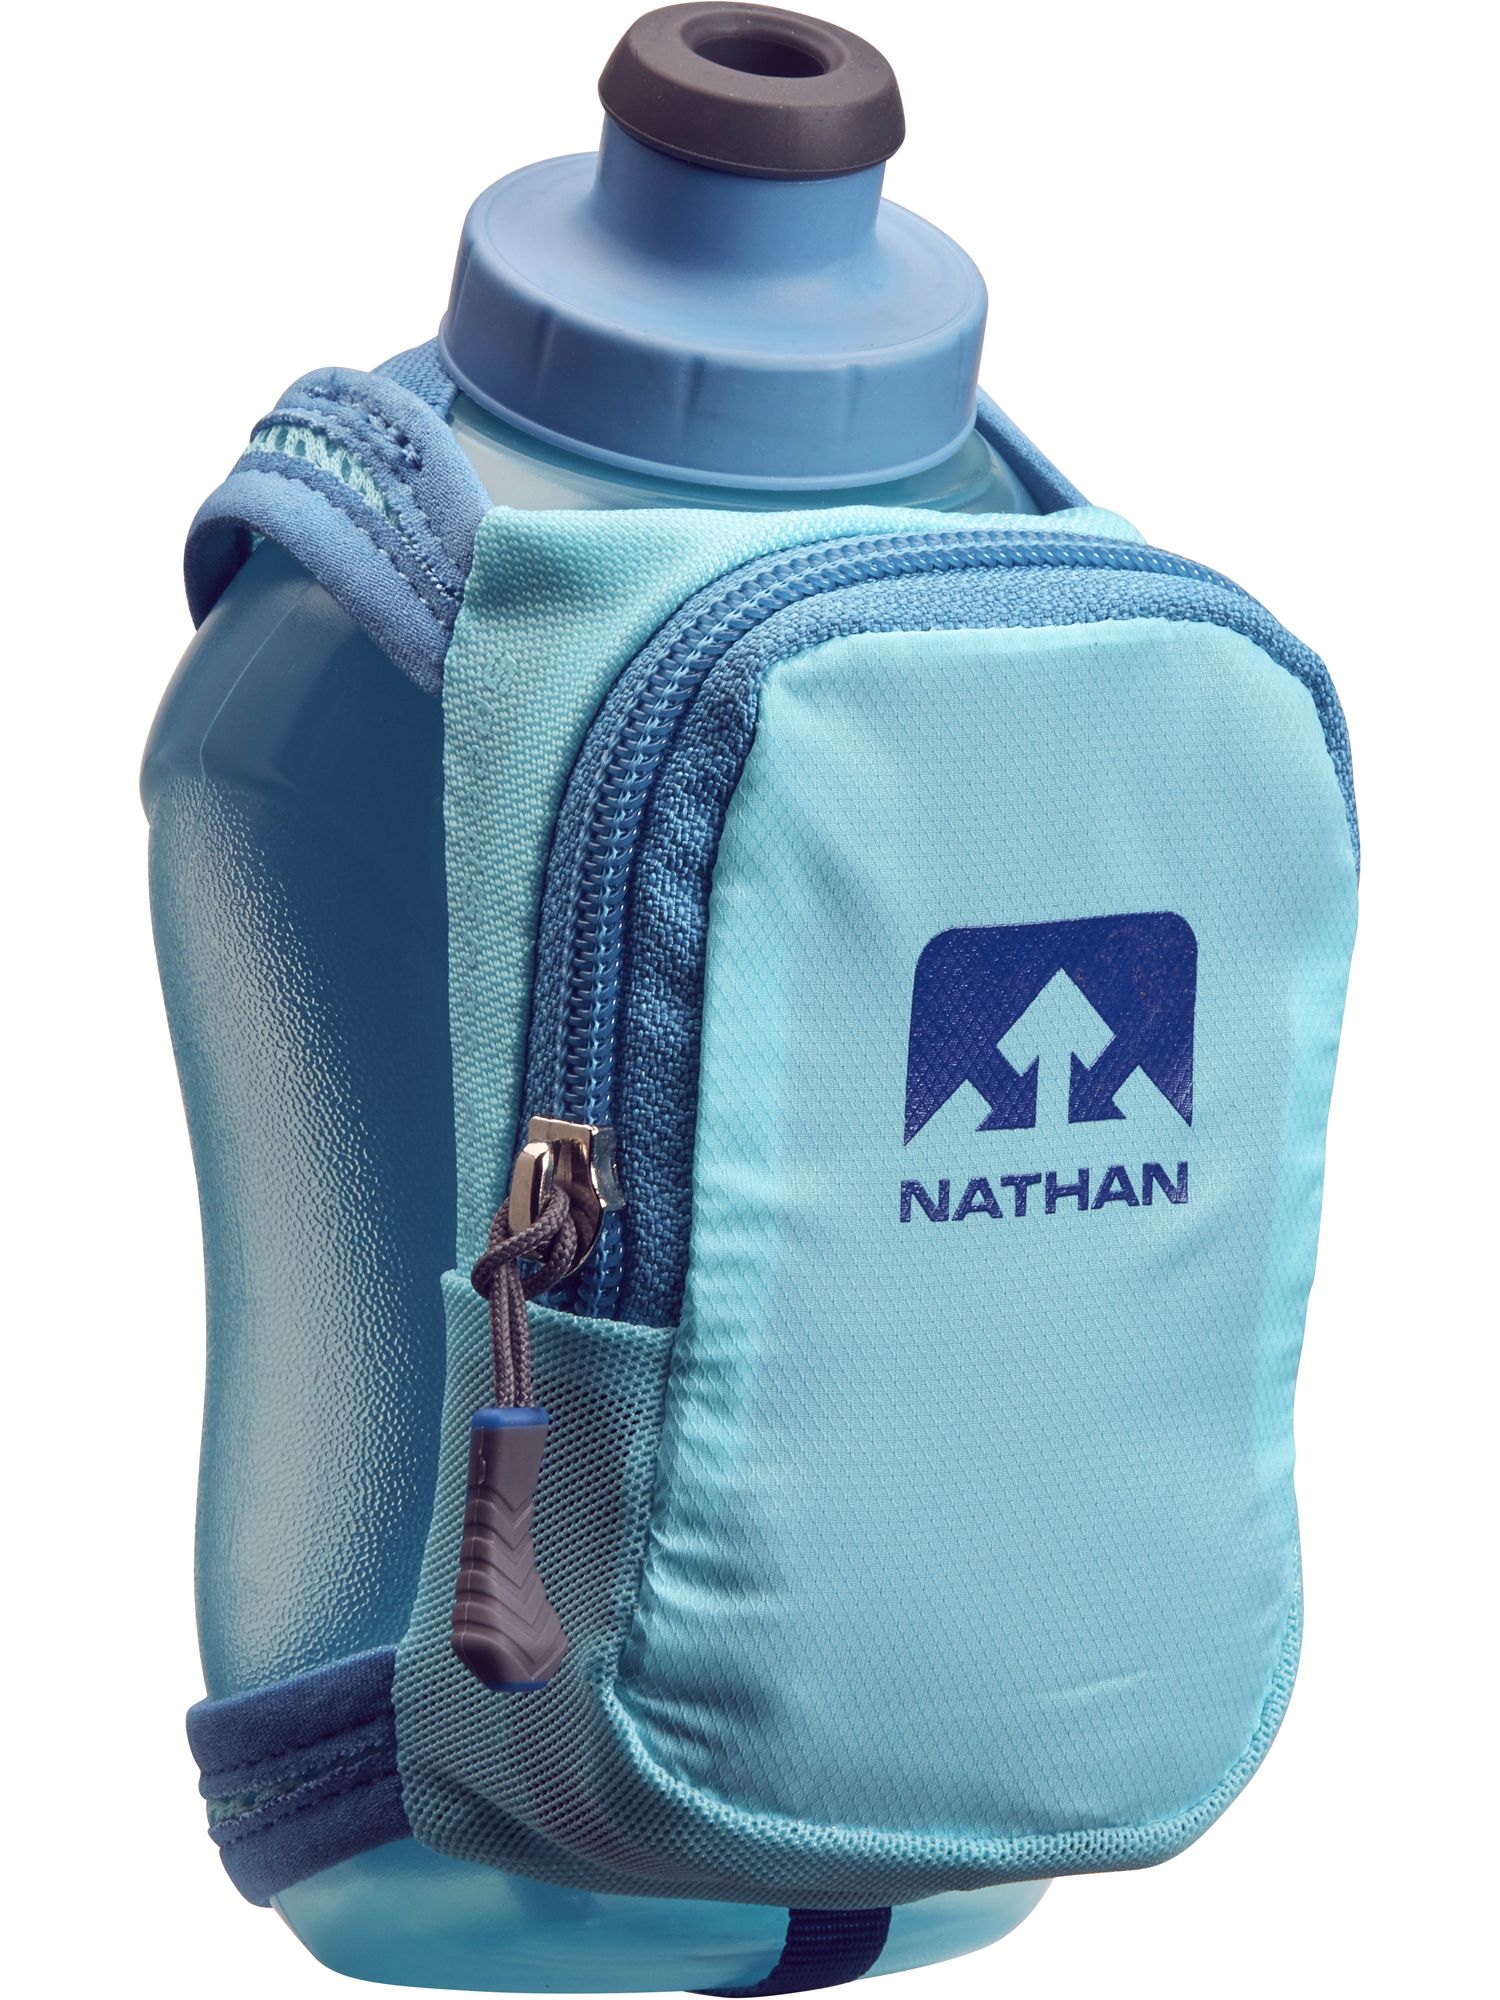 Nathan SpeedMax Plus Water Bottle - 22oz - Accessories